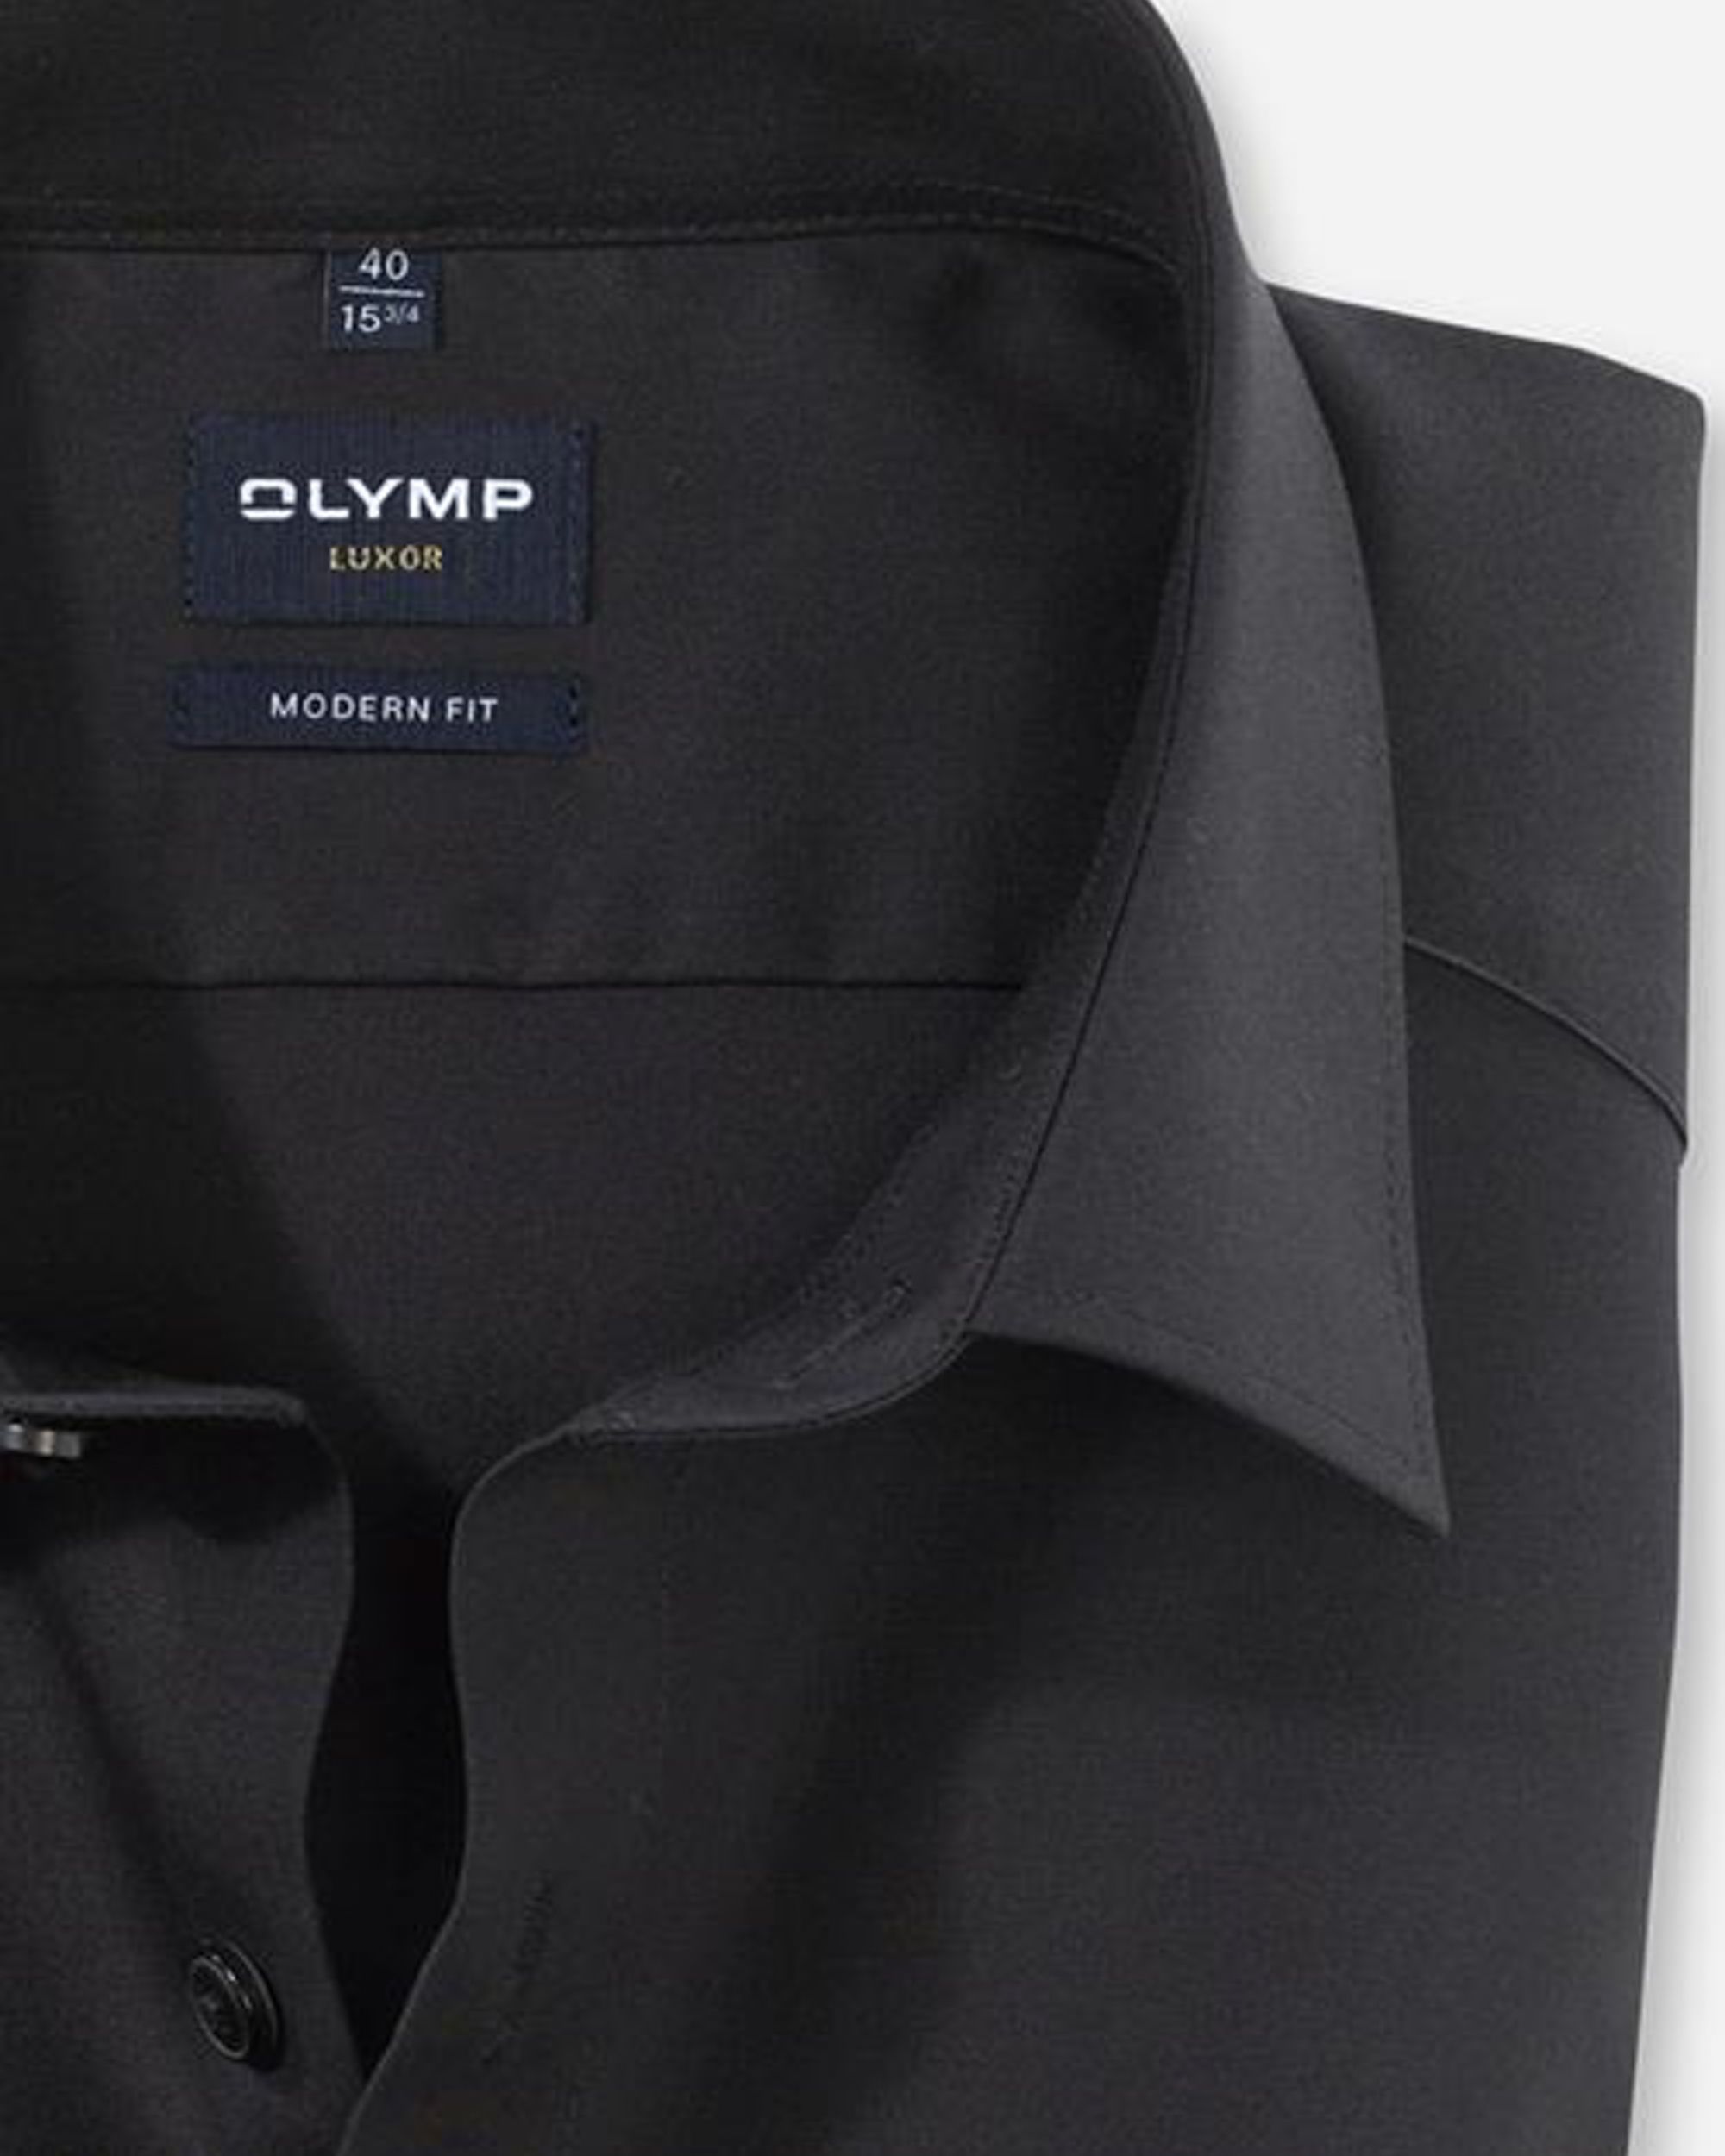 OLYMP Luxor Modern Fit overhemd LM Zwart 011412-10-37